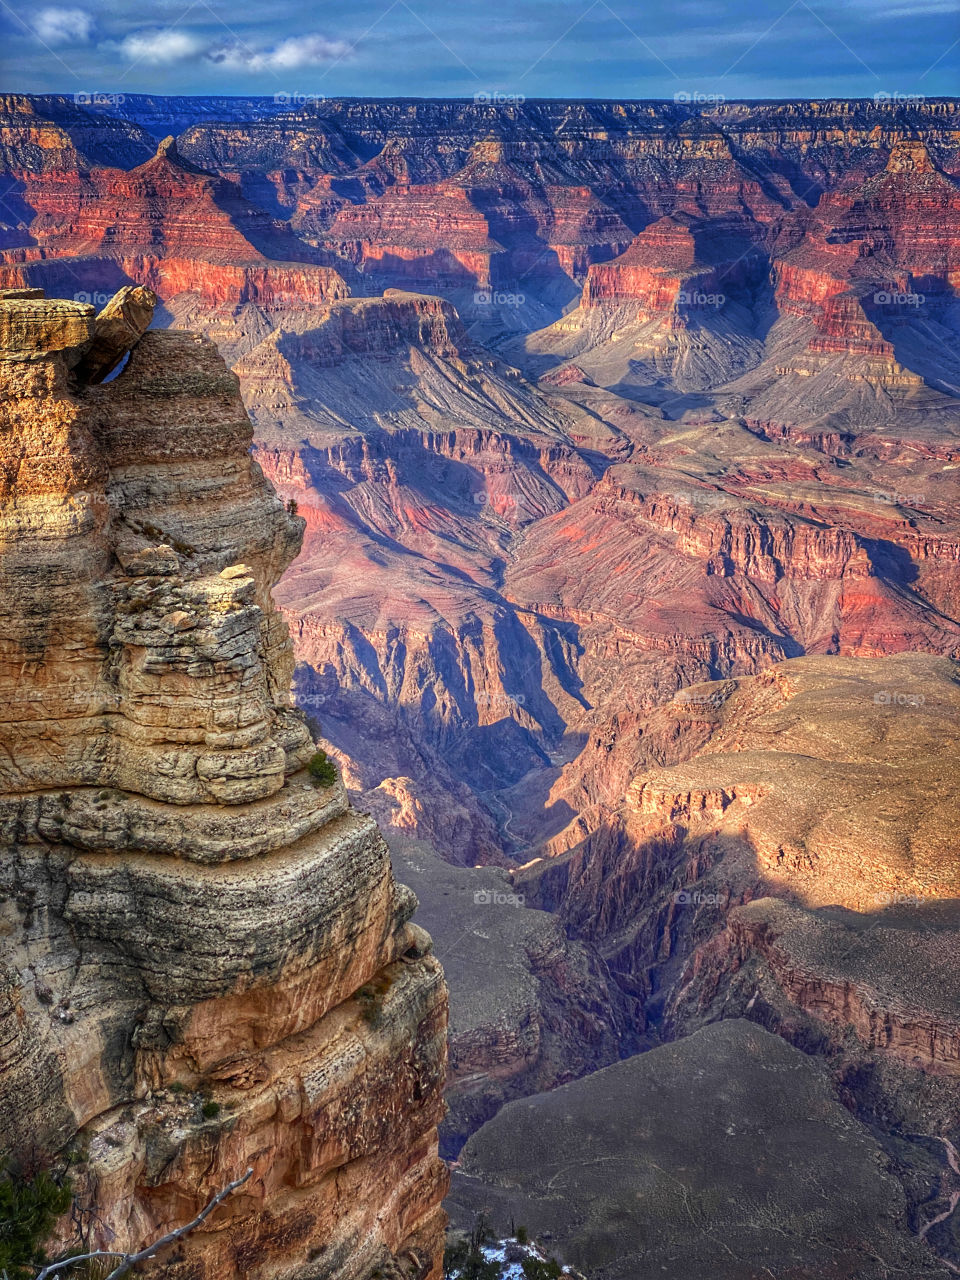 Grand Canyon landscape in portrait mode